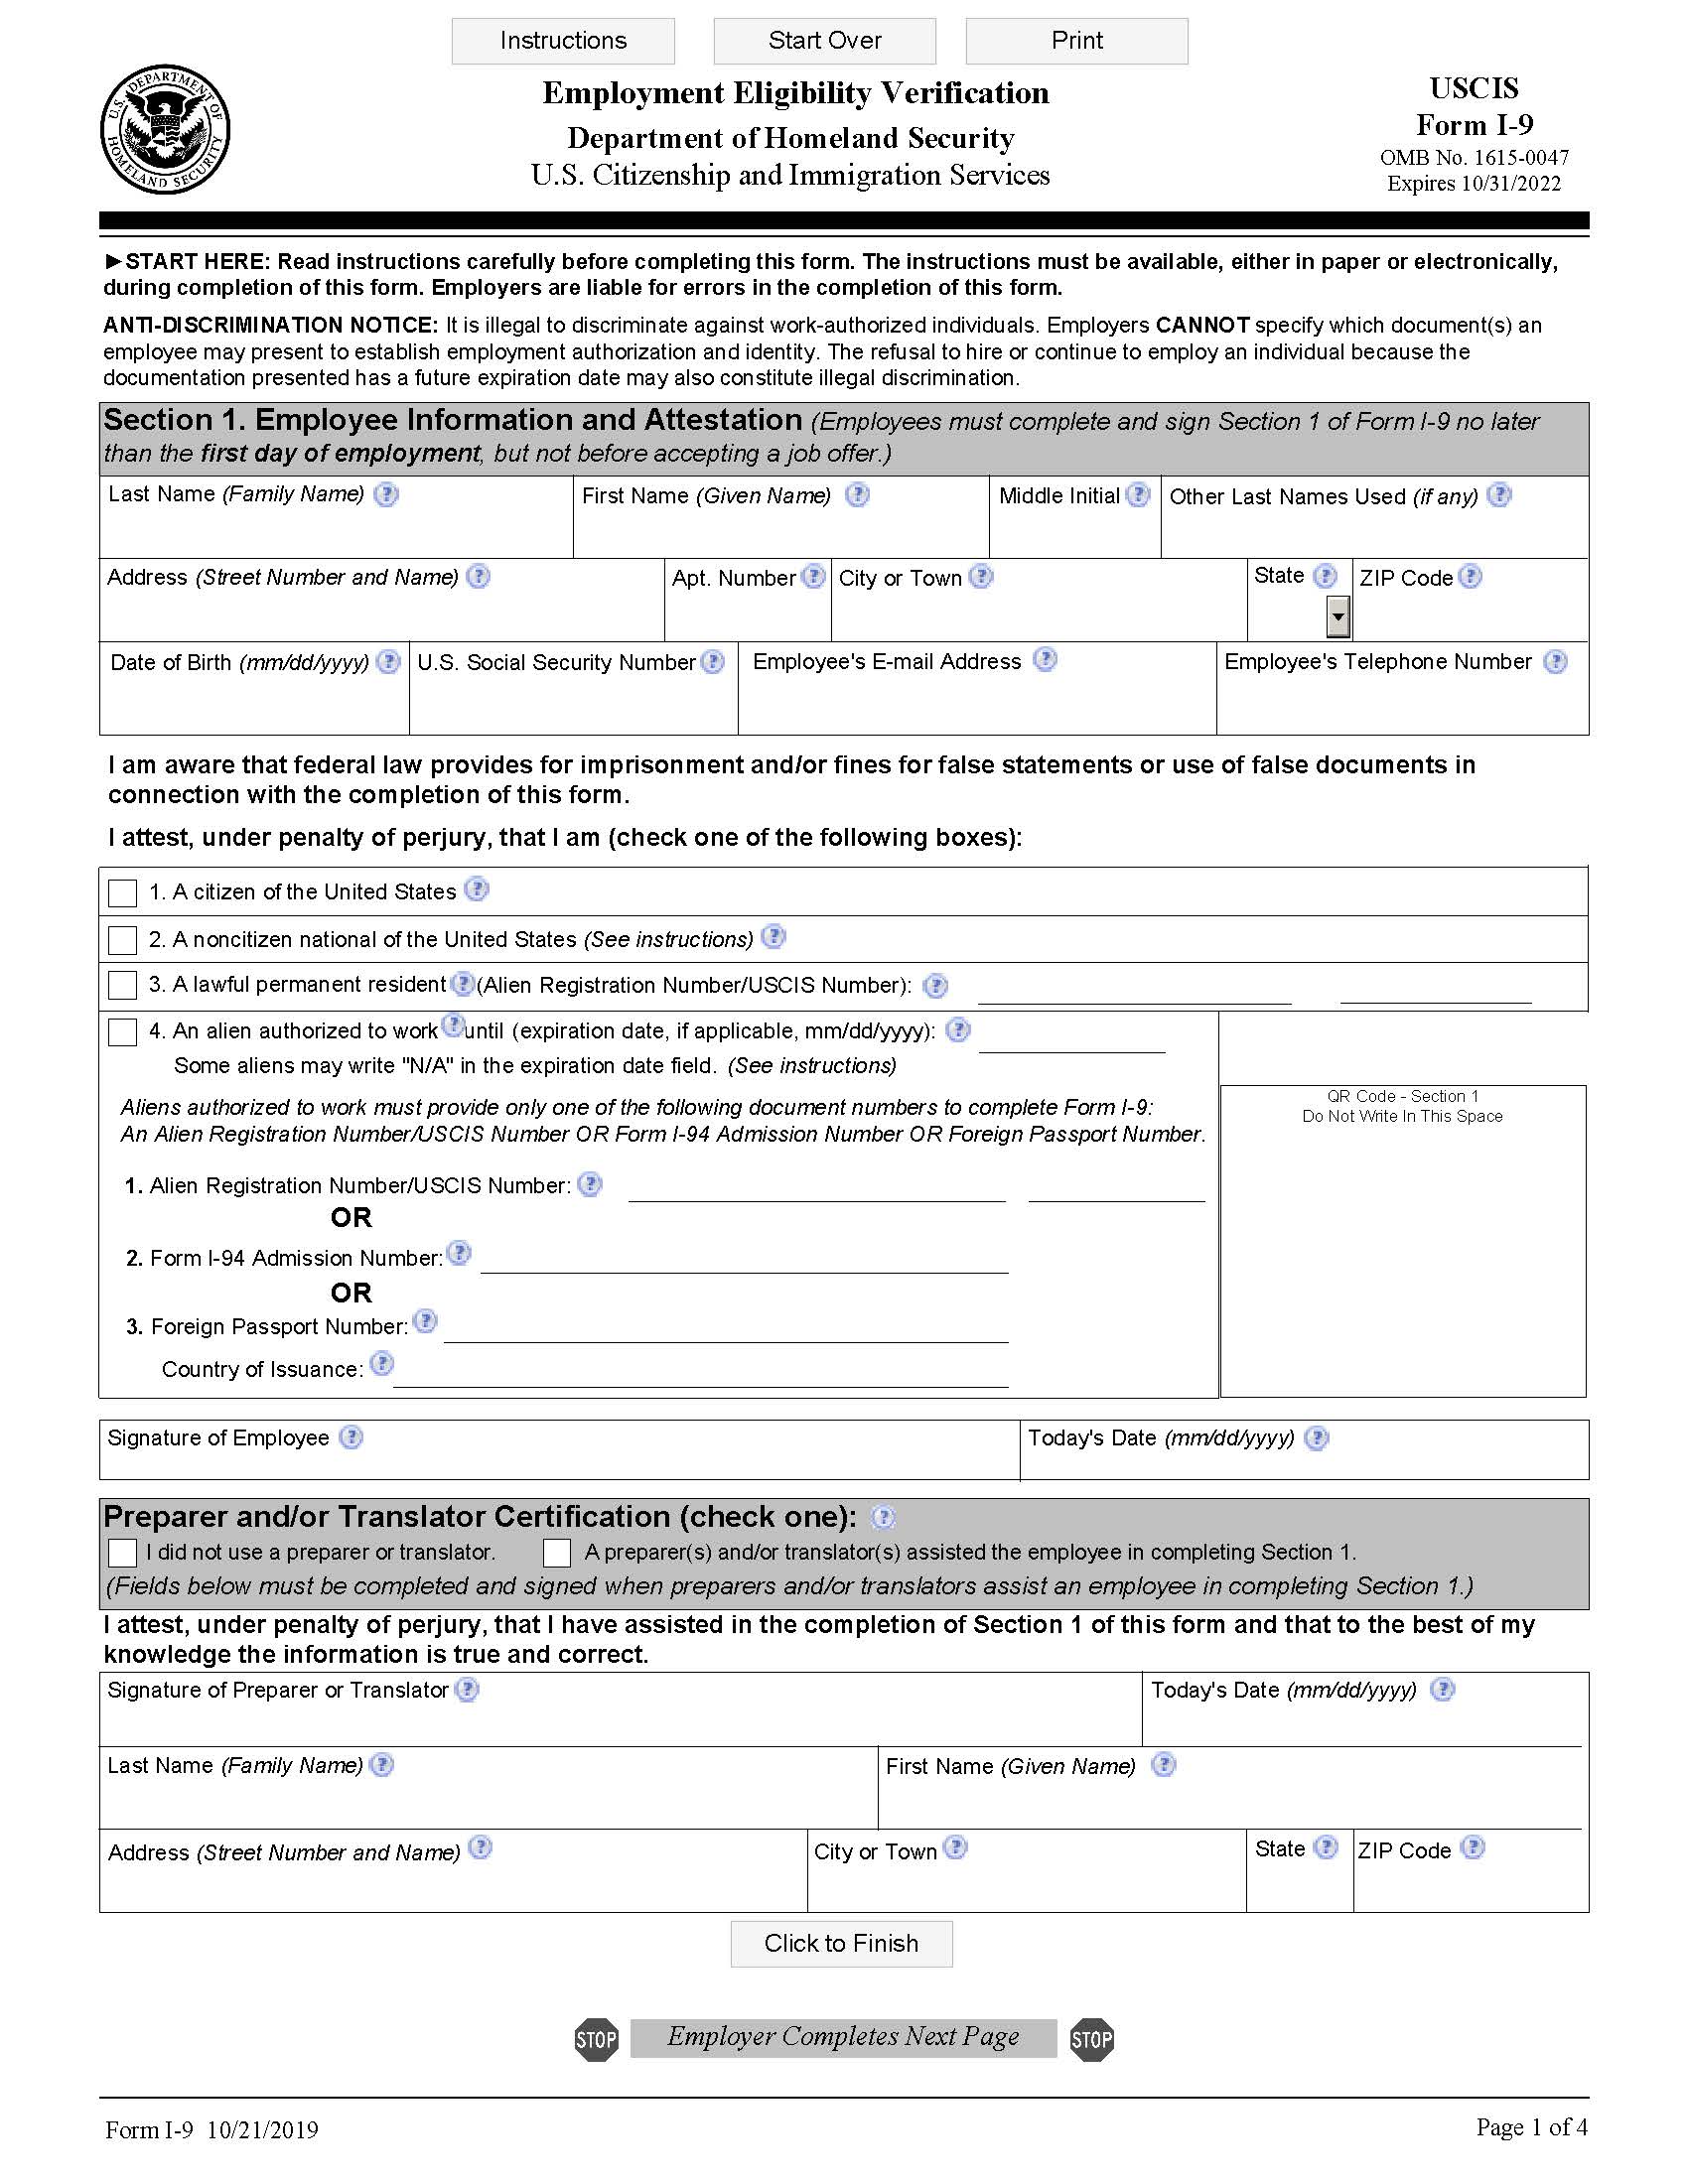 I9 Form 2023 Printable, Fillable Form PDF_Page_1